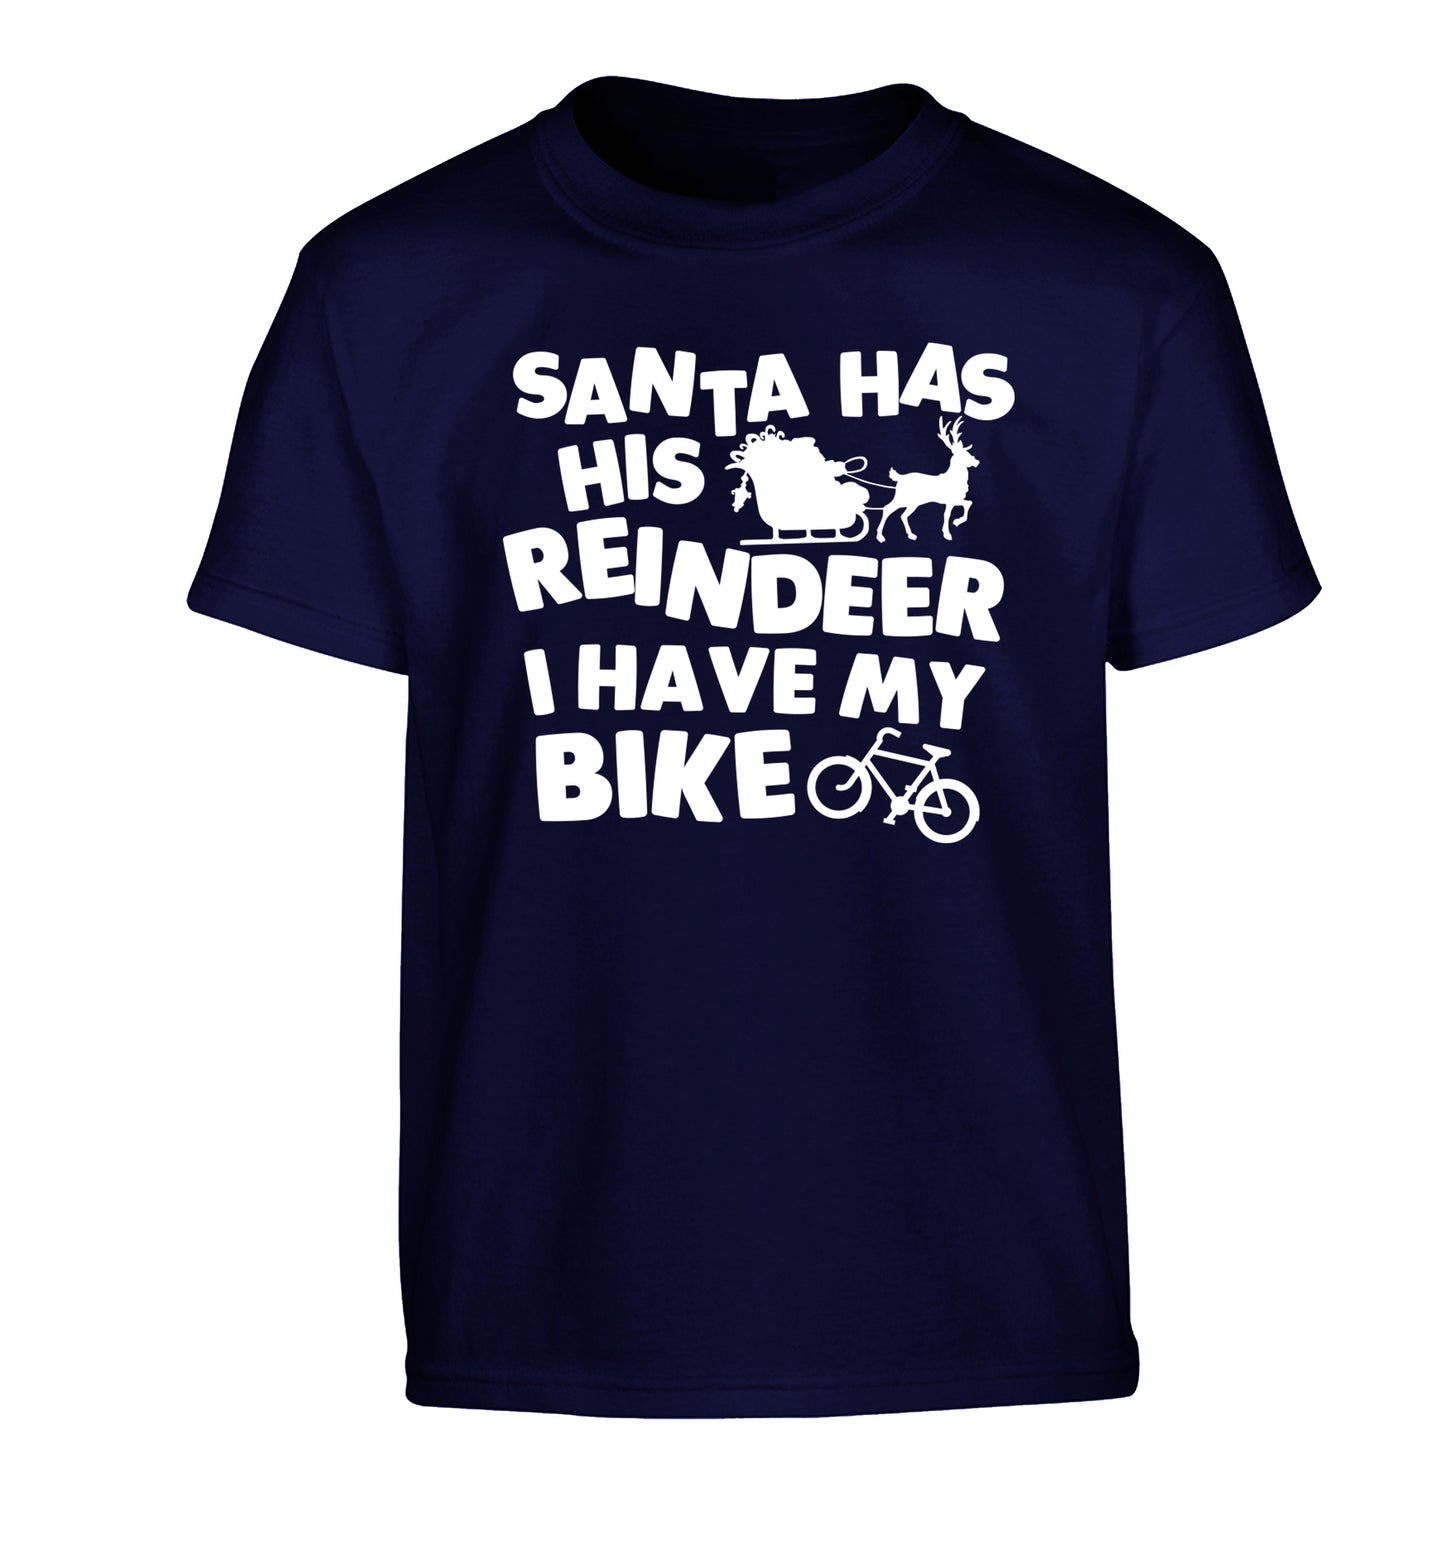 Santa has his reindeer I have my bike Children's navy Tshirt 12-14 Years